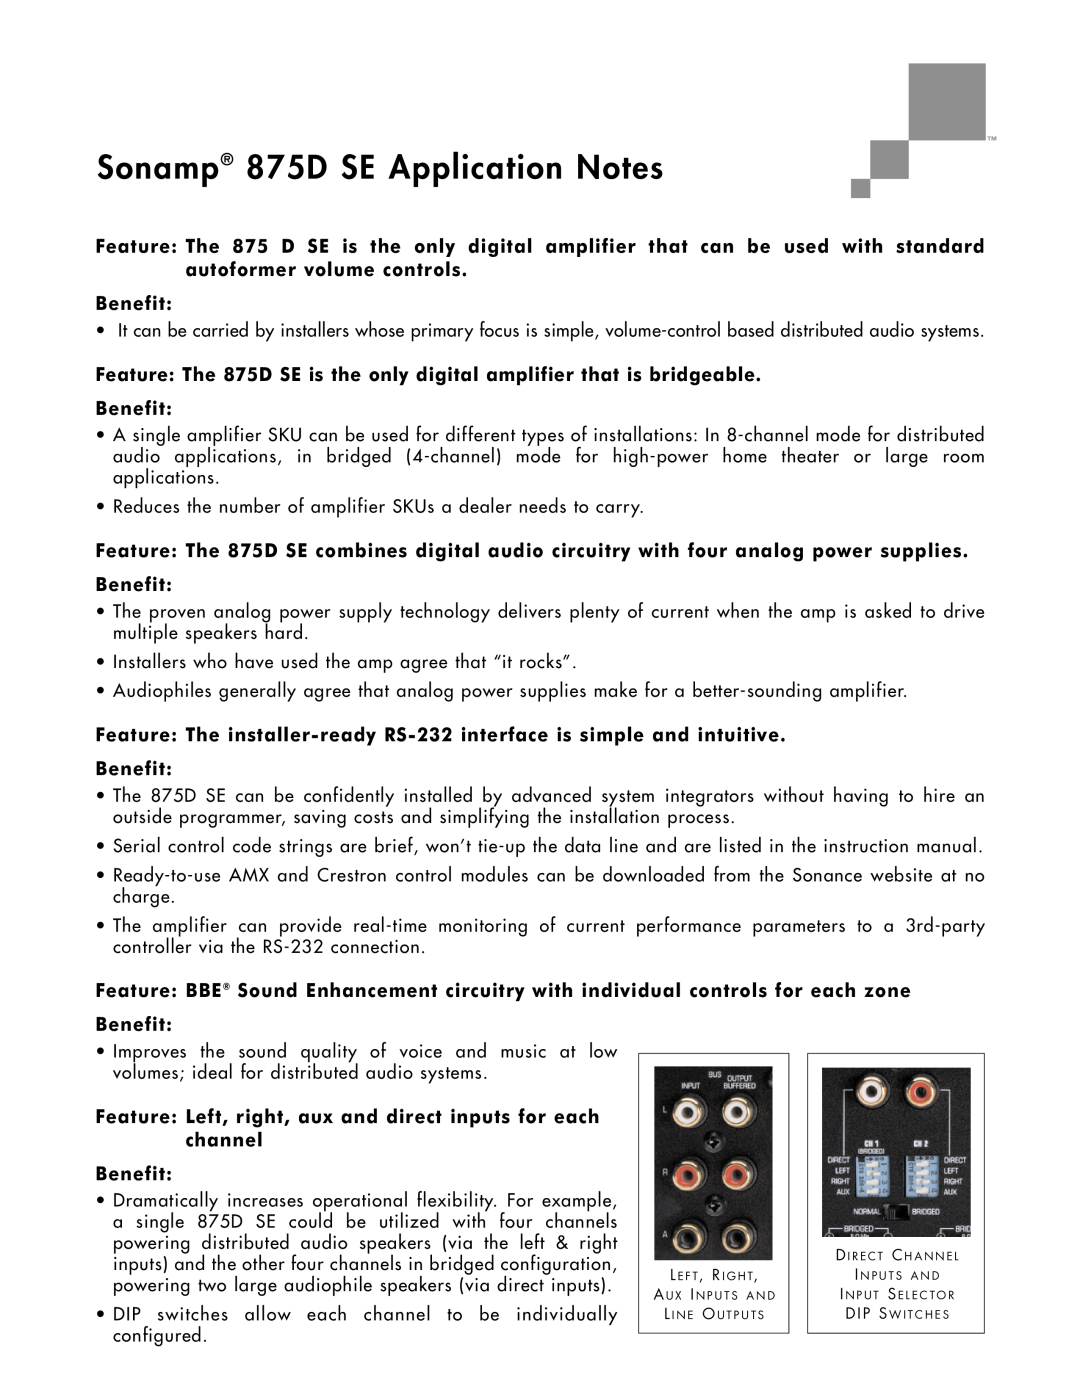 Sonance manual Sonamp 875D SE Application Notes, Benefit 